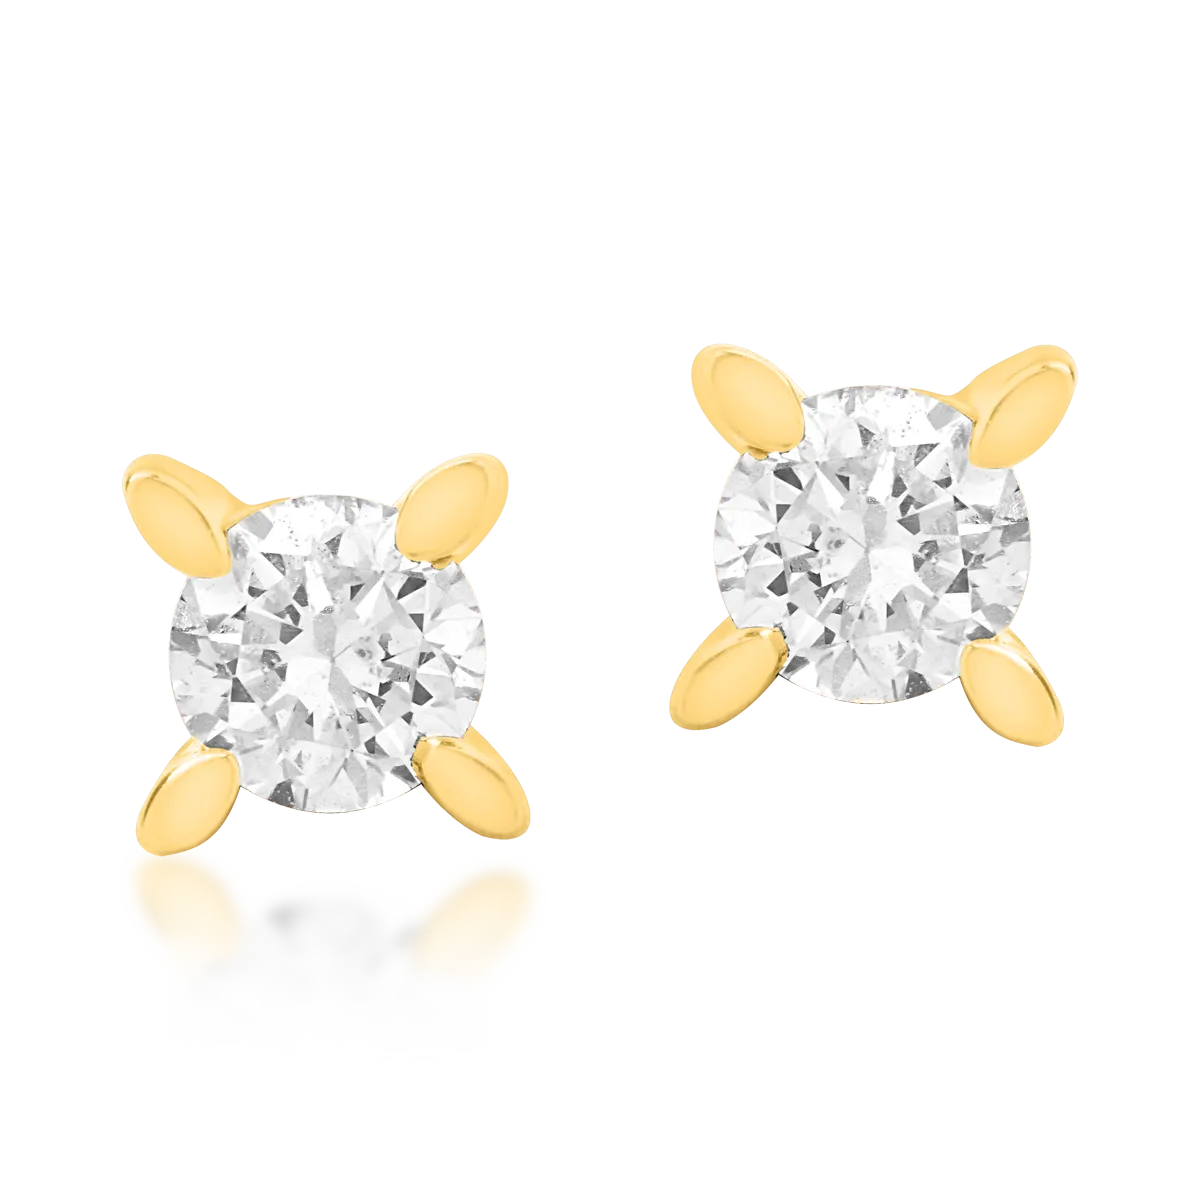 18K yellow gold earrings with 0.4ct diamonds